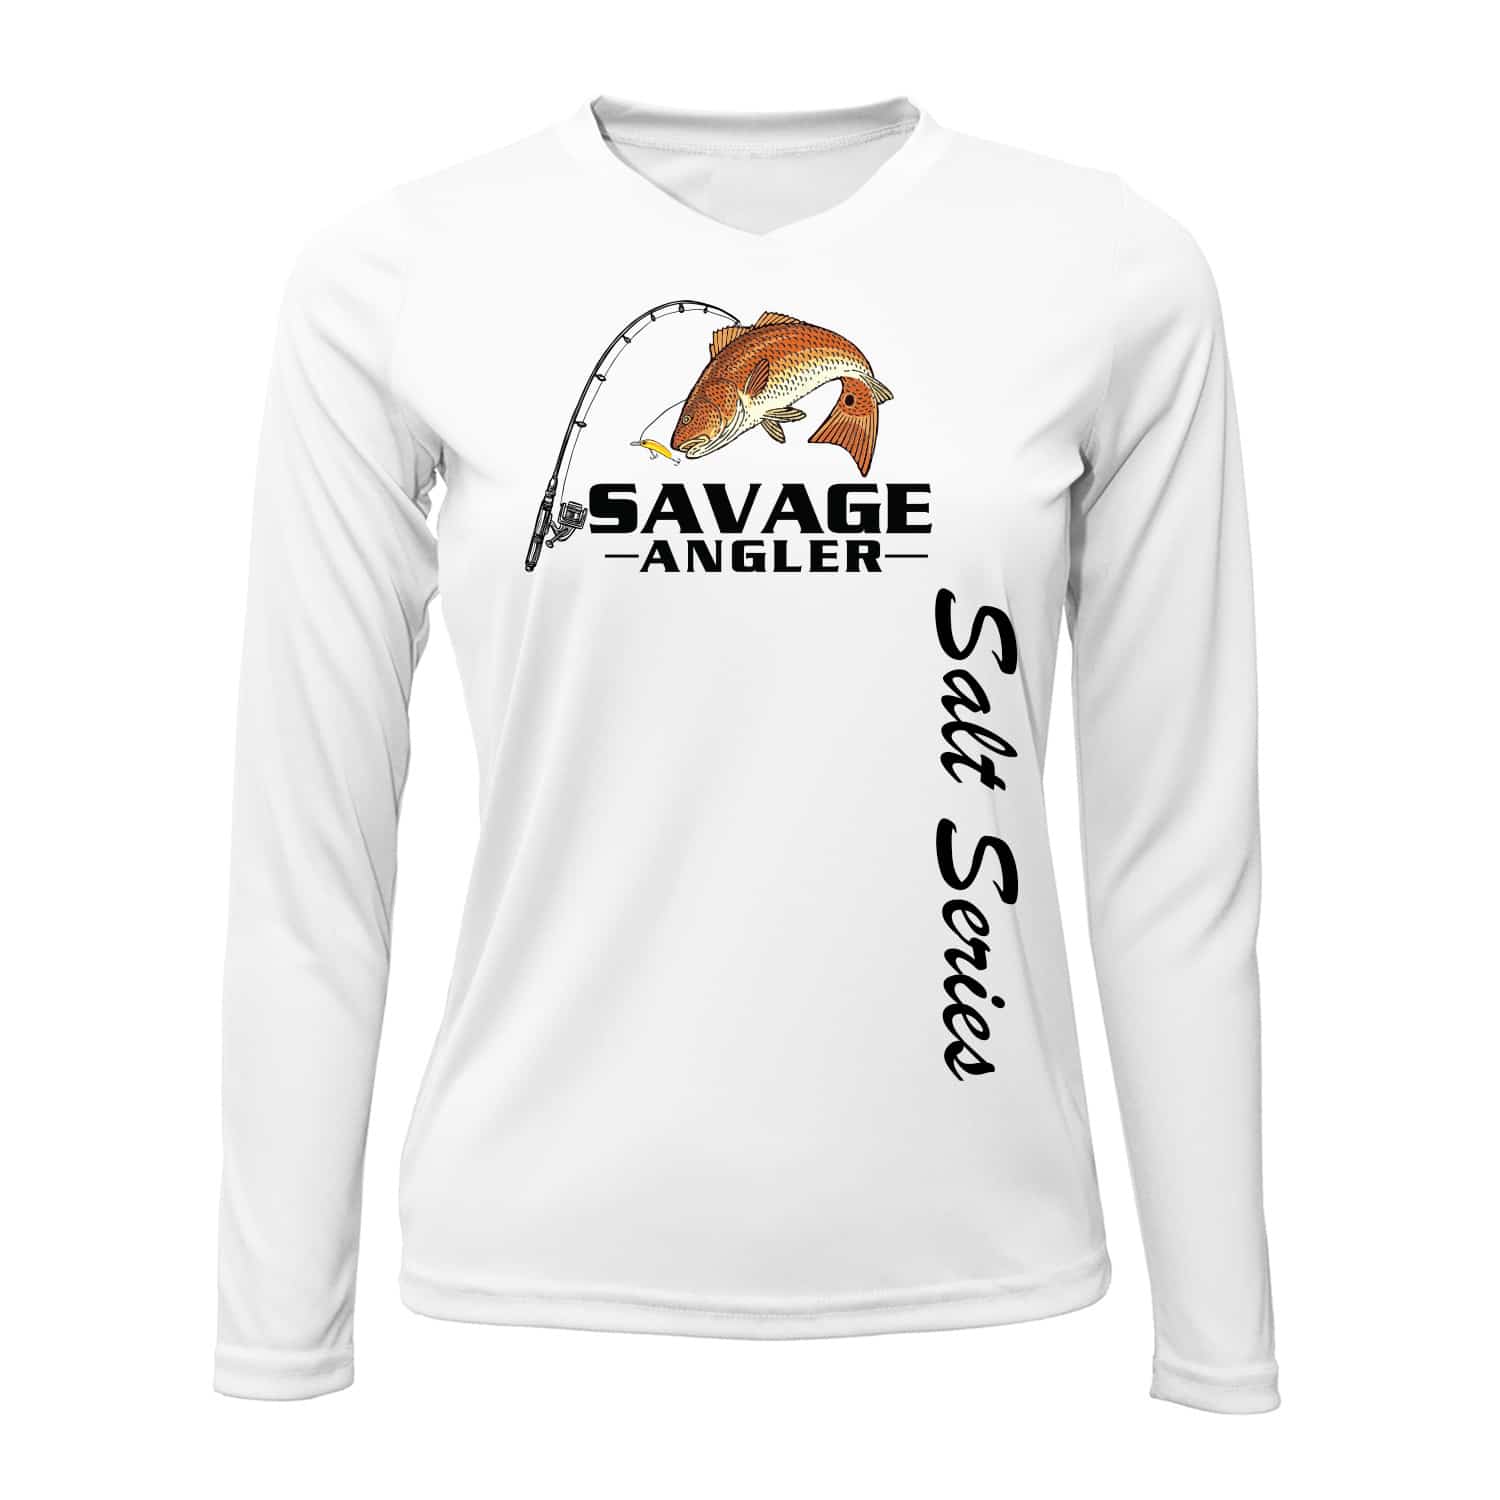 Women's Performance Fishing Shirts & Clothing » Savage Angler